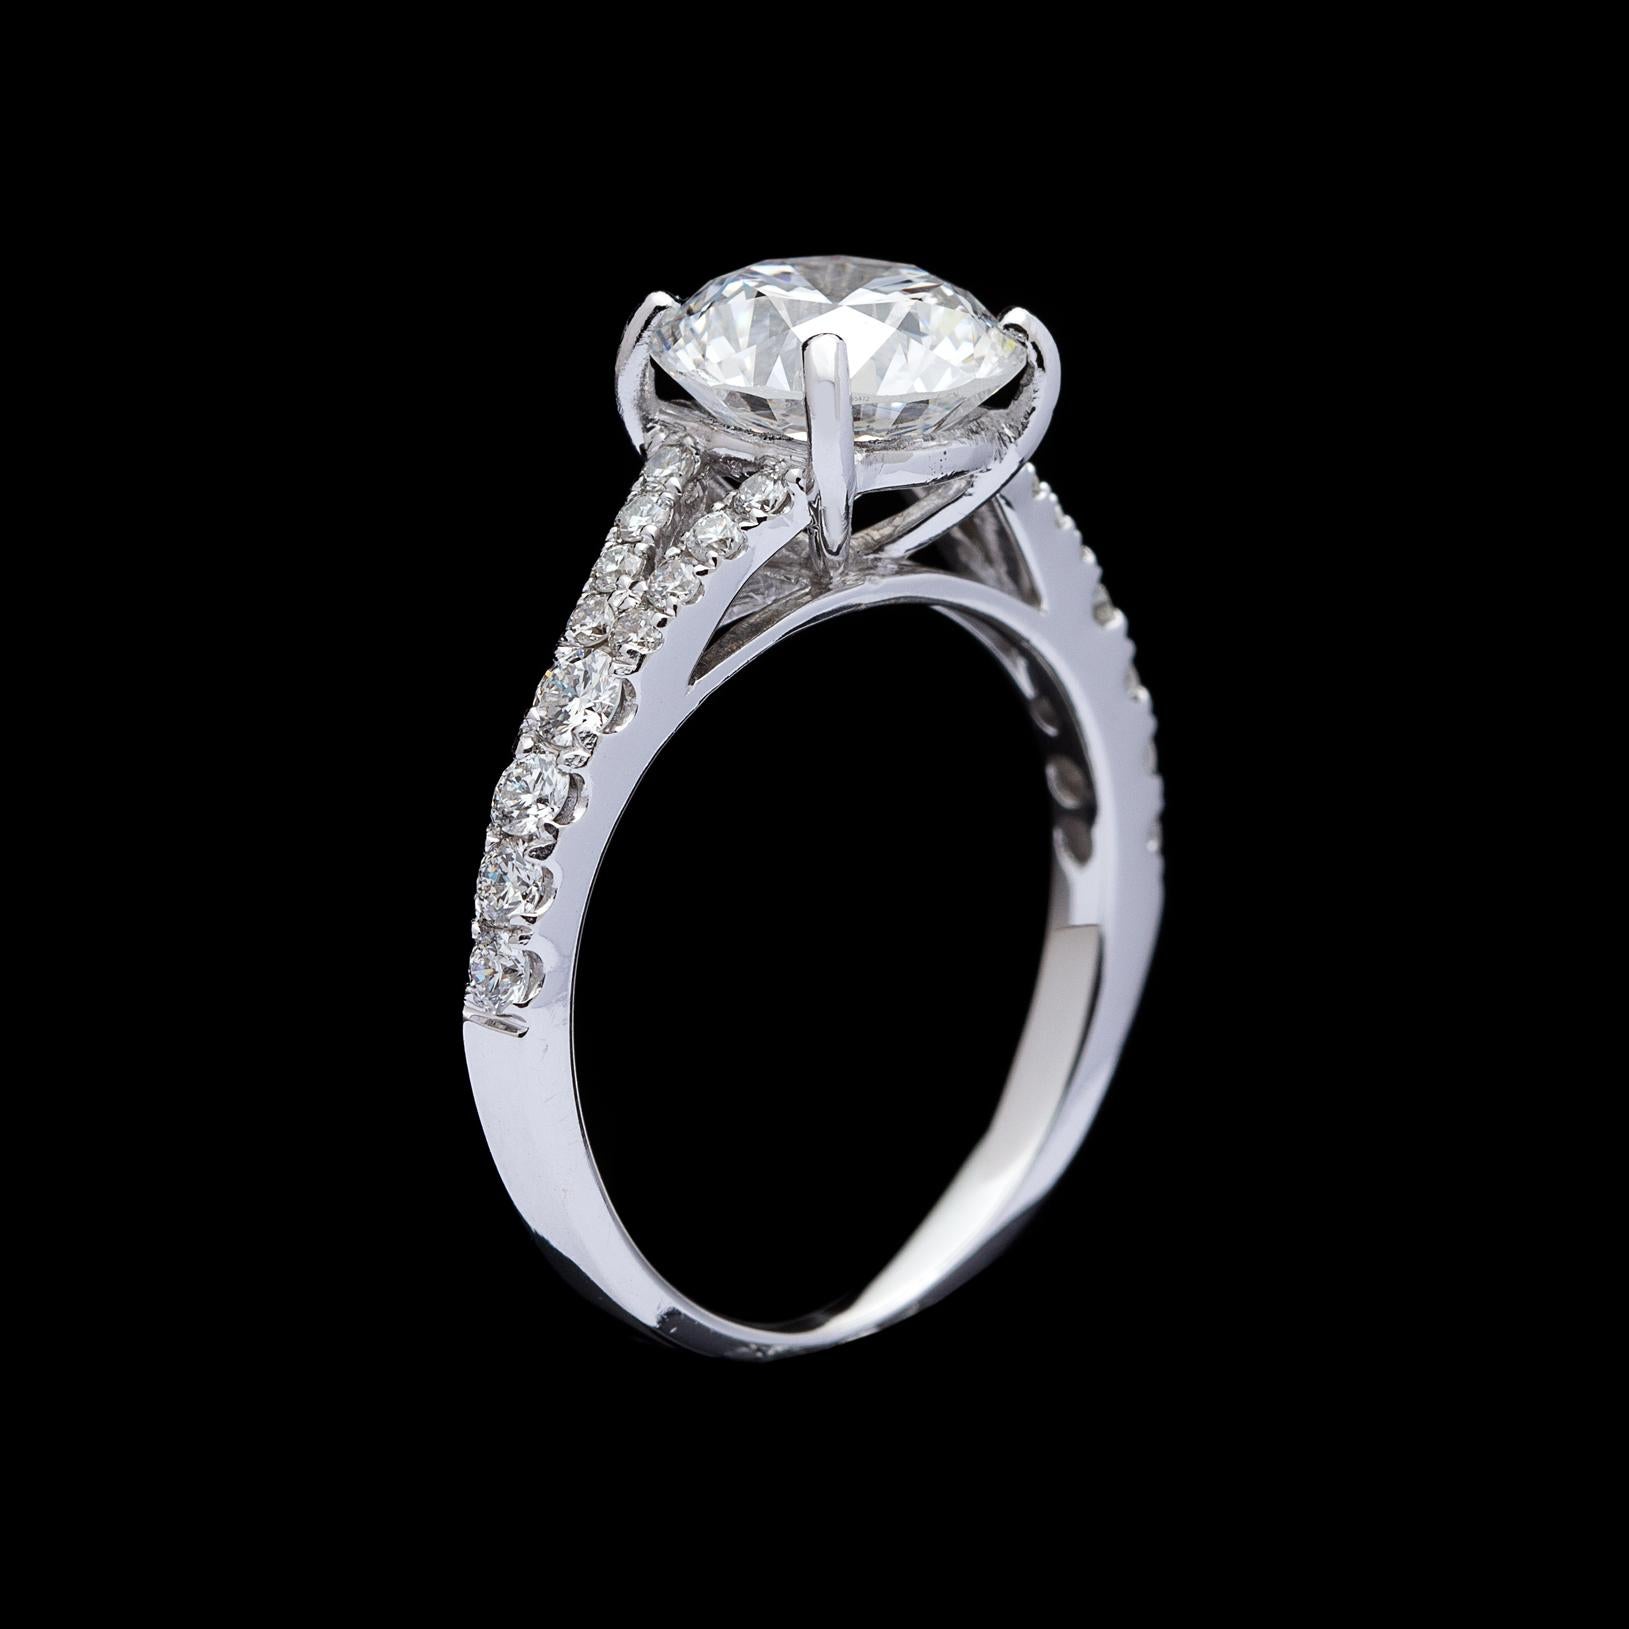 2.11 carat diamond ring